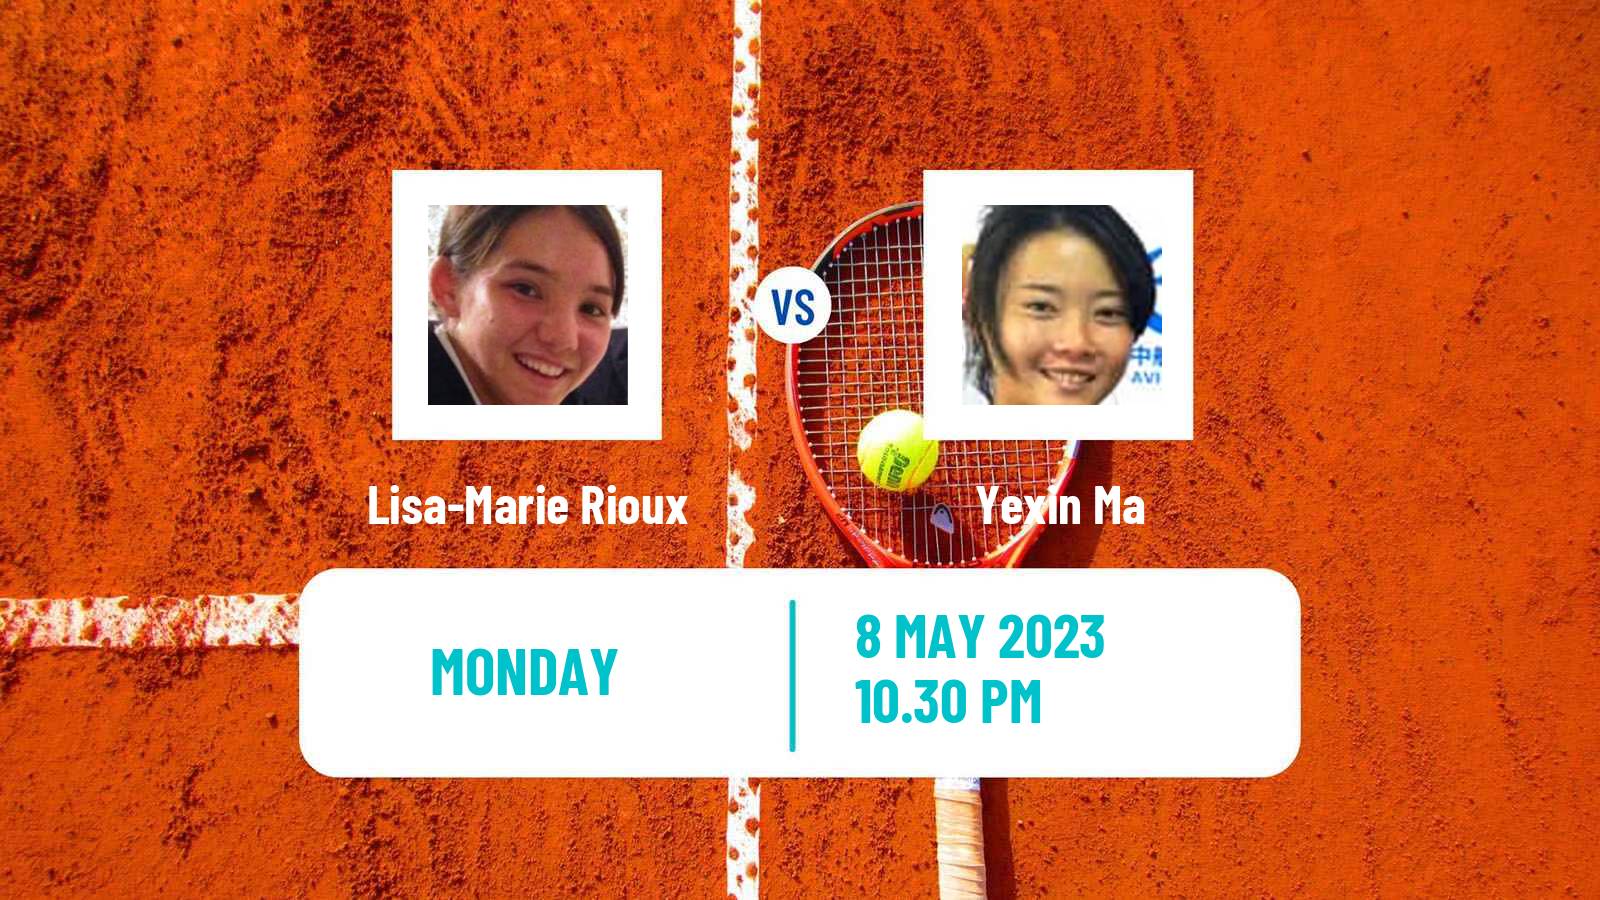 Tennis ITF Tournaments Lisa-Marie Rioux - Yexin Ma